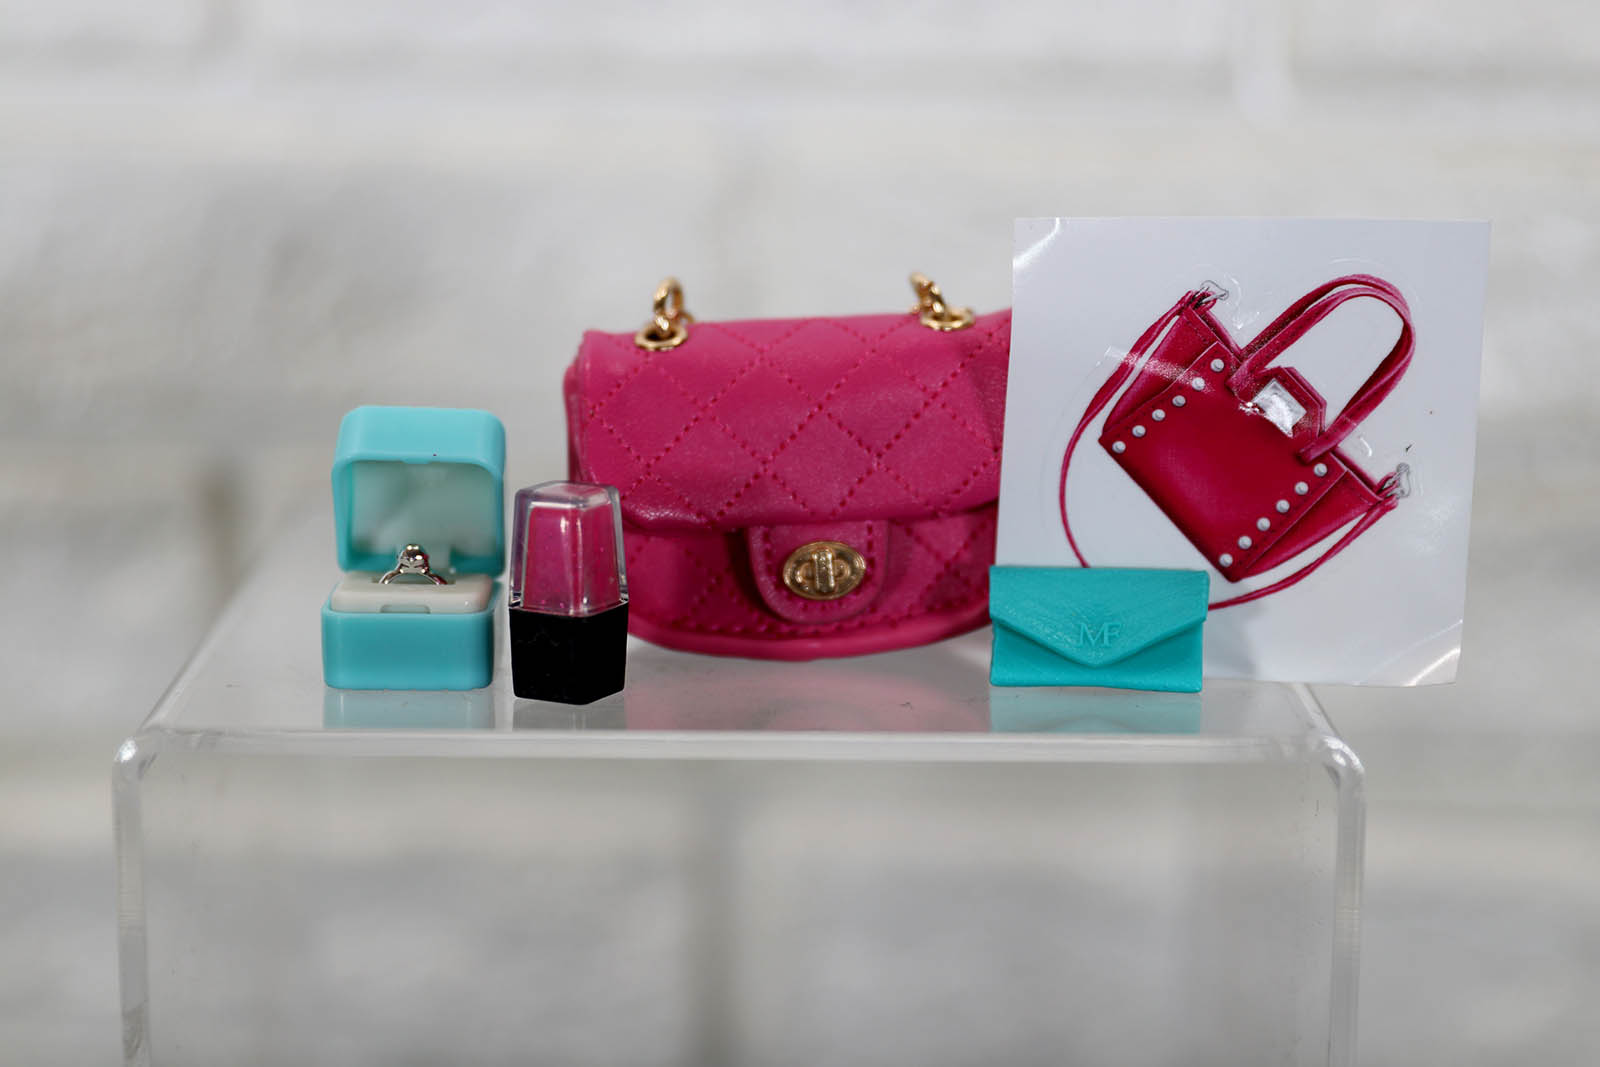 Zuru™ 5 Surprise™ Mini Fashion Blind Bag - Styles May Vary